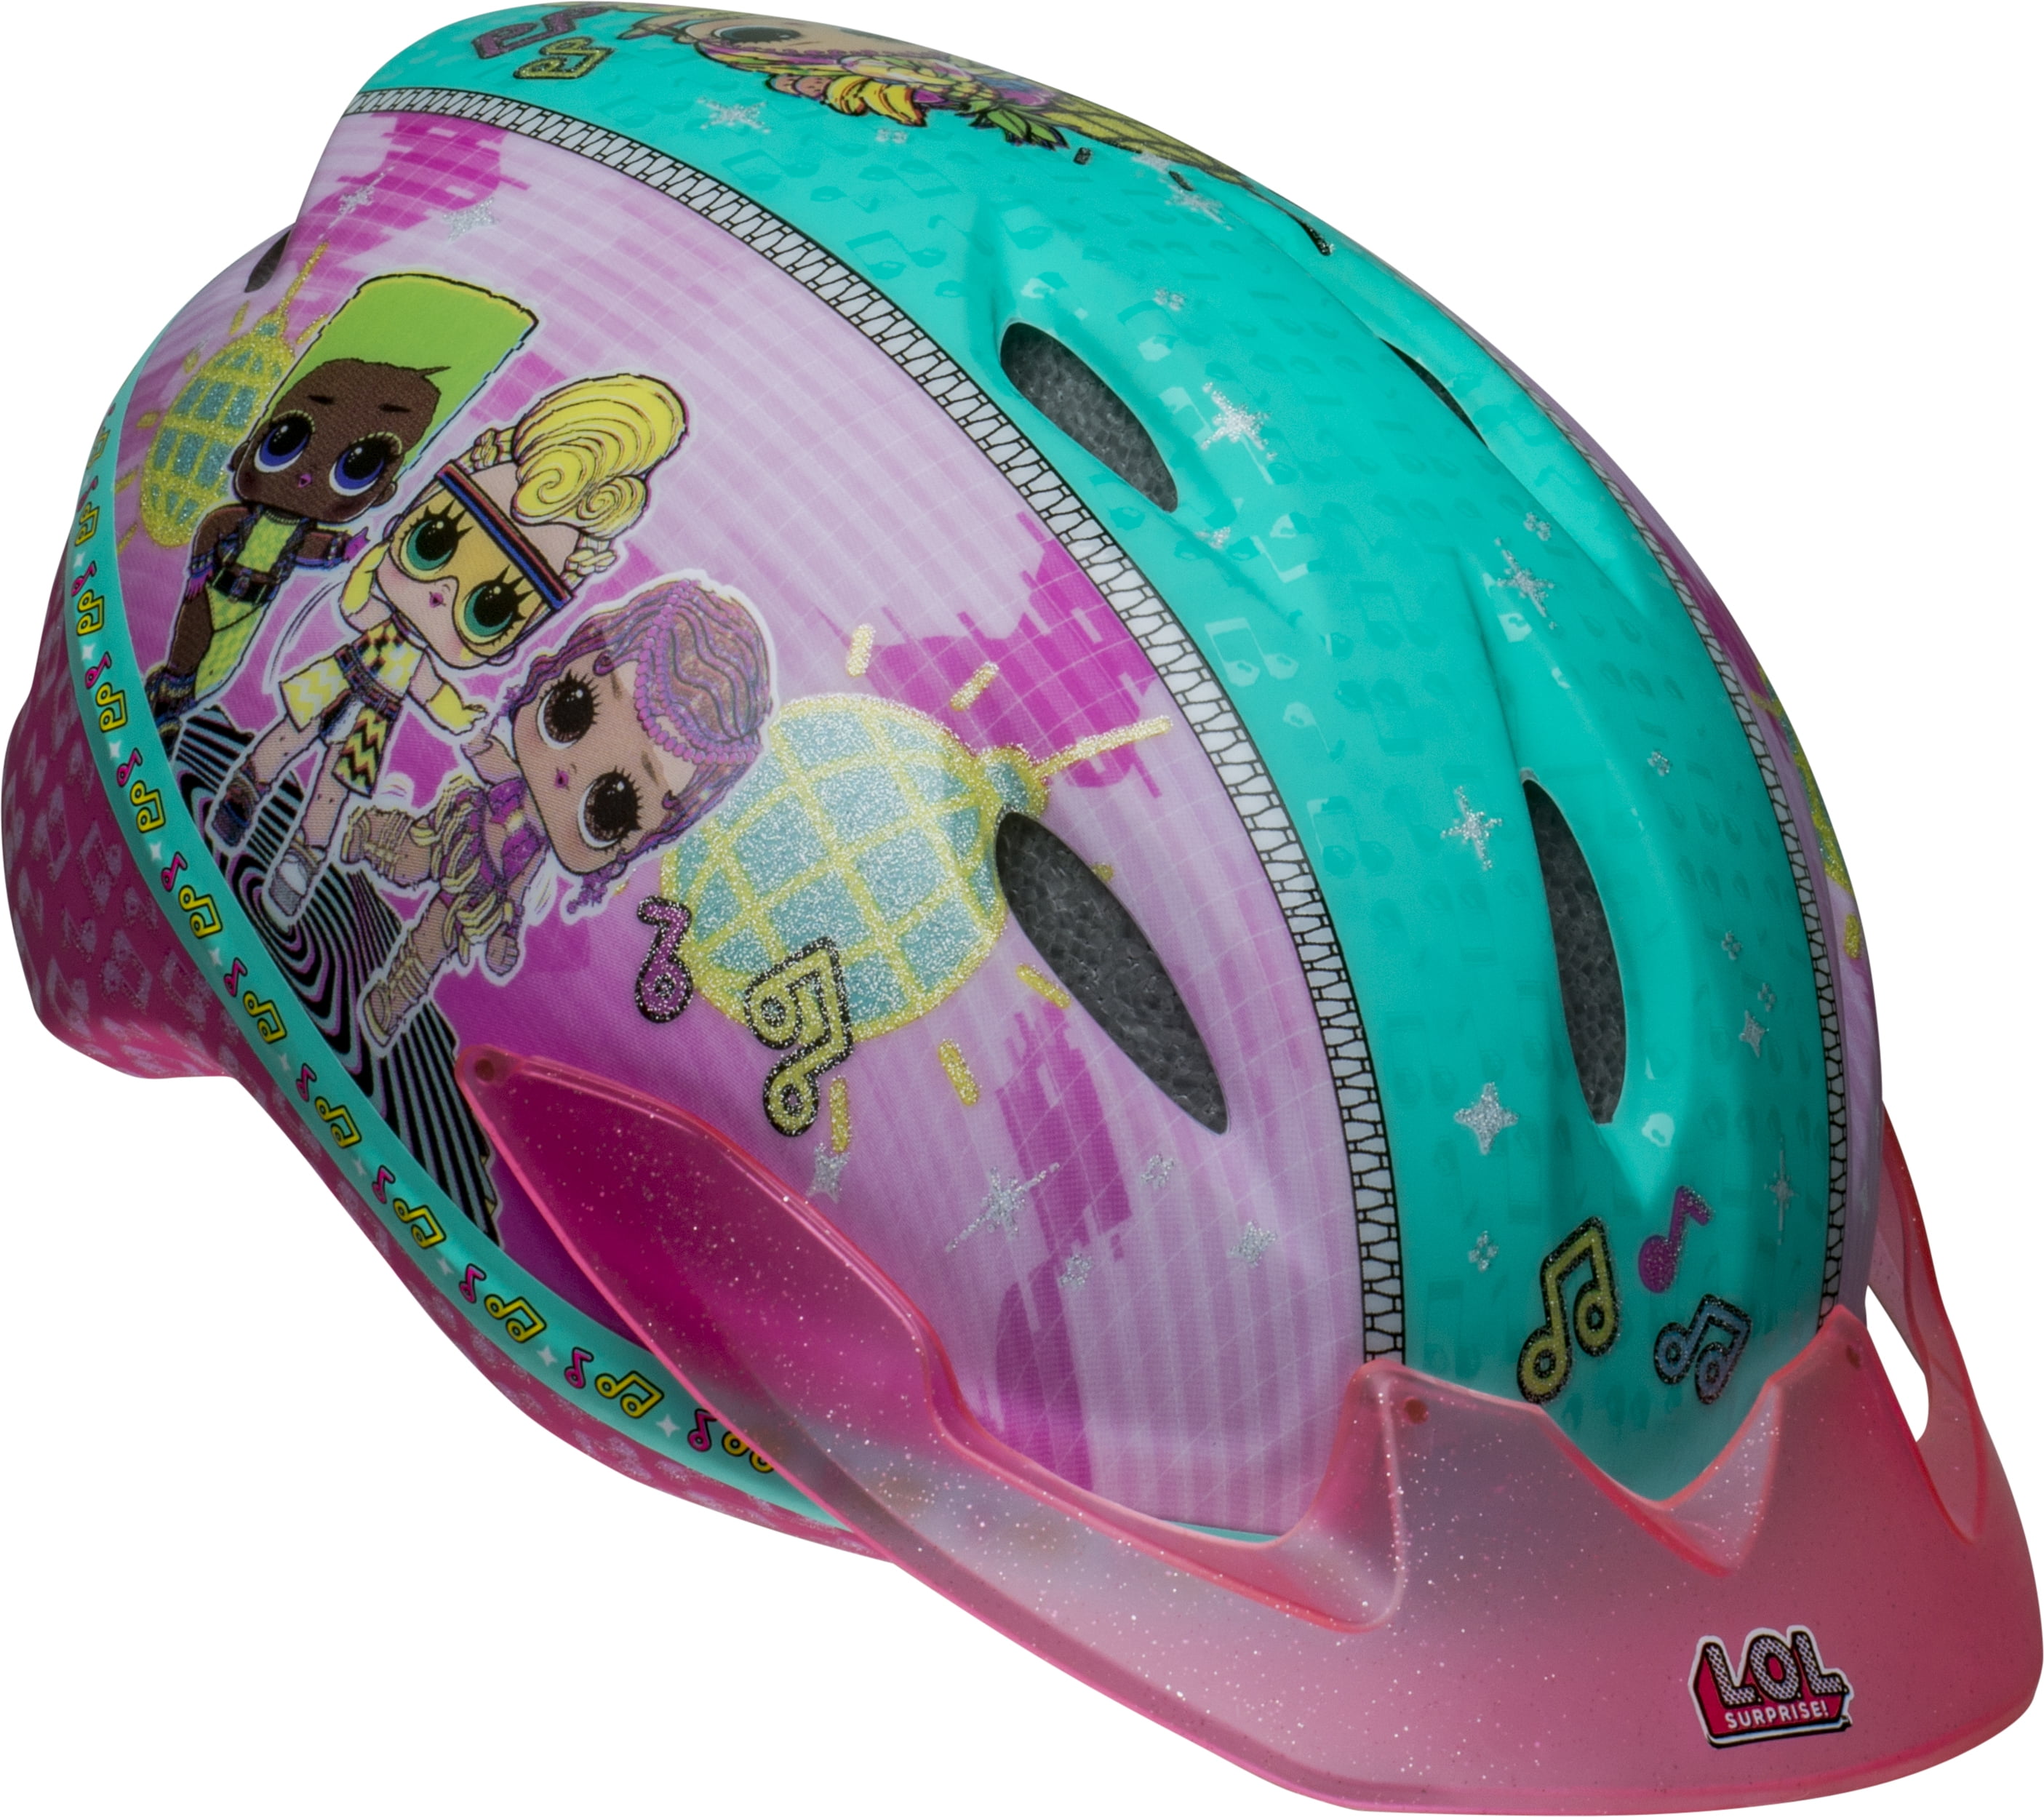 Doll Bike Helmet Pink Bike Helmet With Easy Strap & Decorate Yourself Decals Fit 